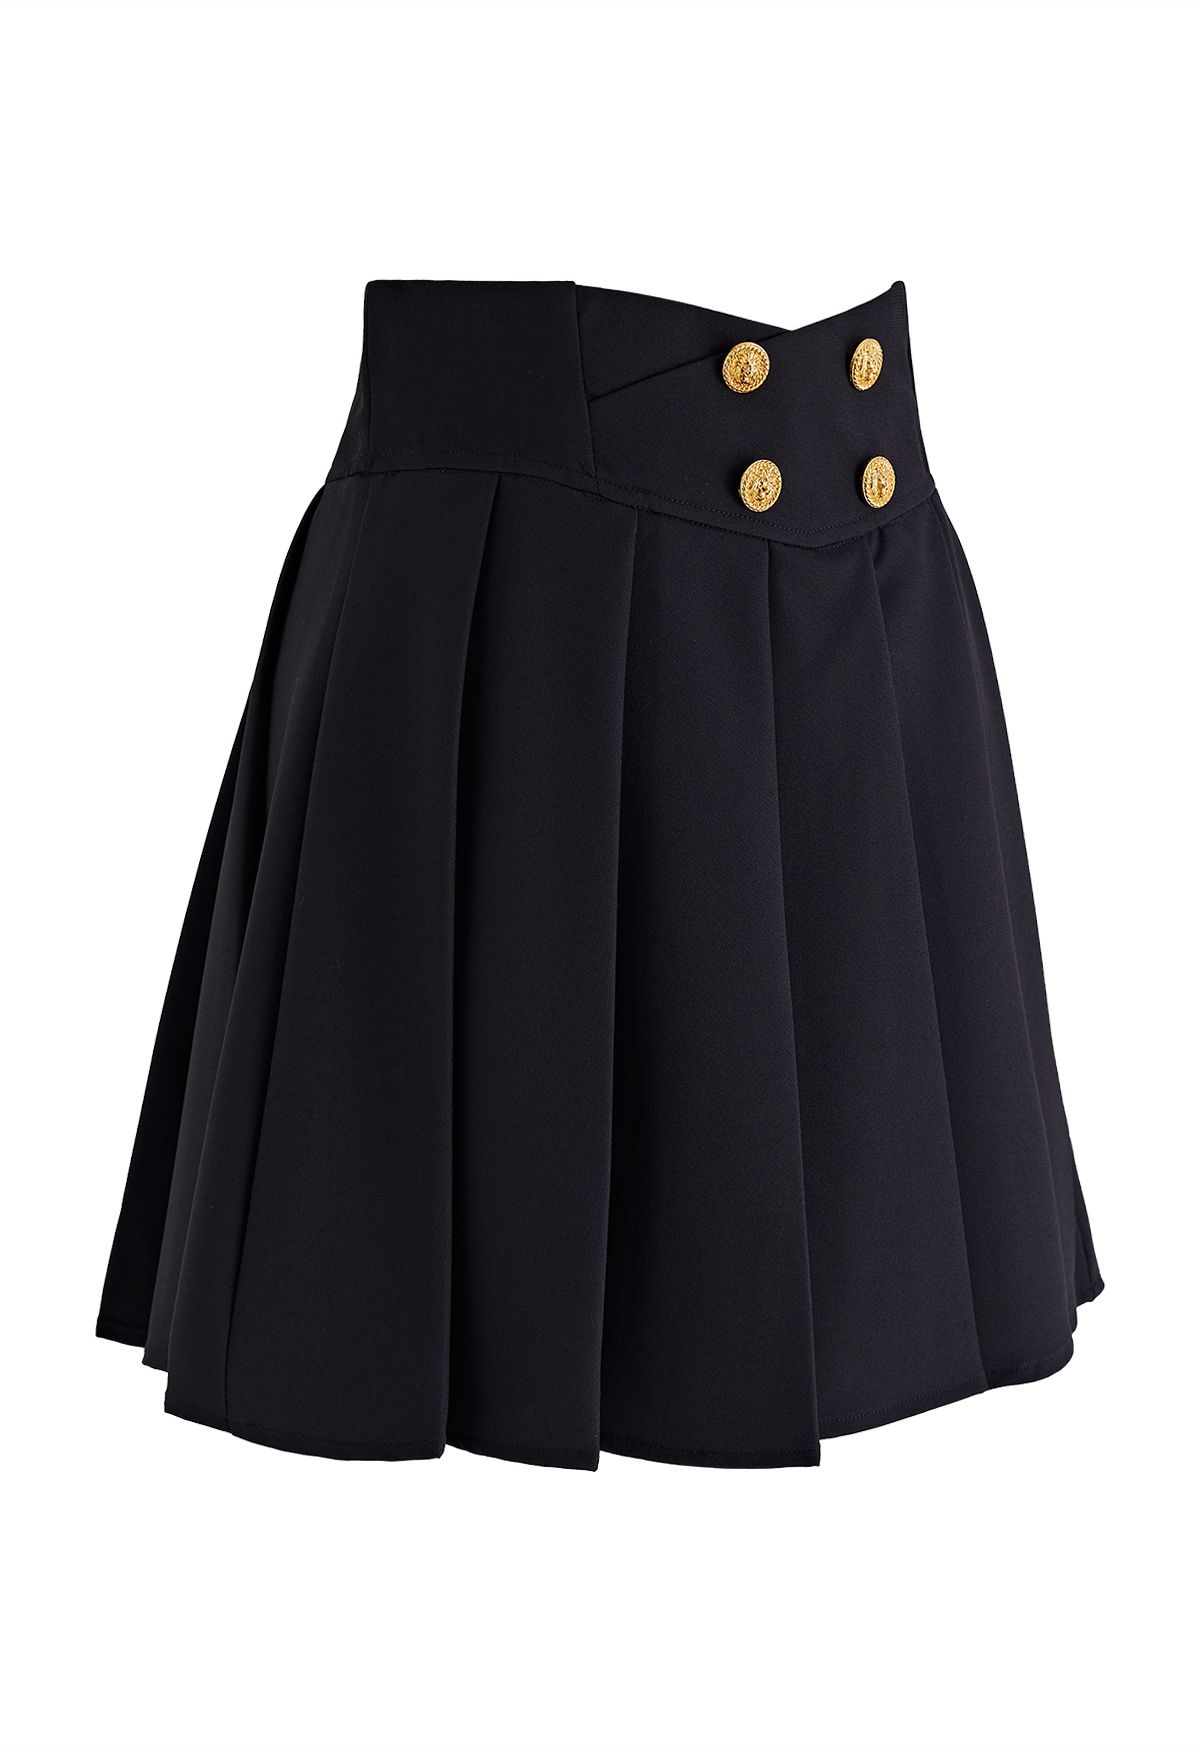 Golden Button Pleated Flare Mini Skirt in Black